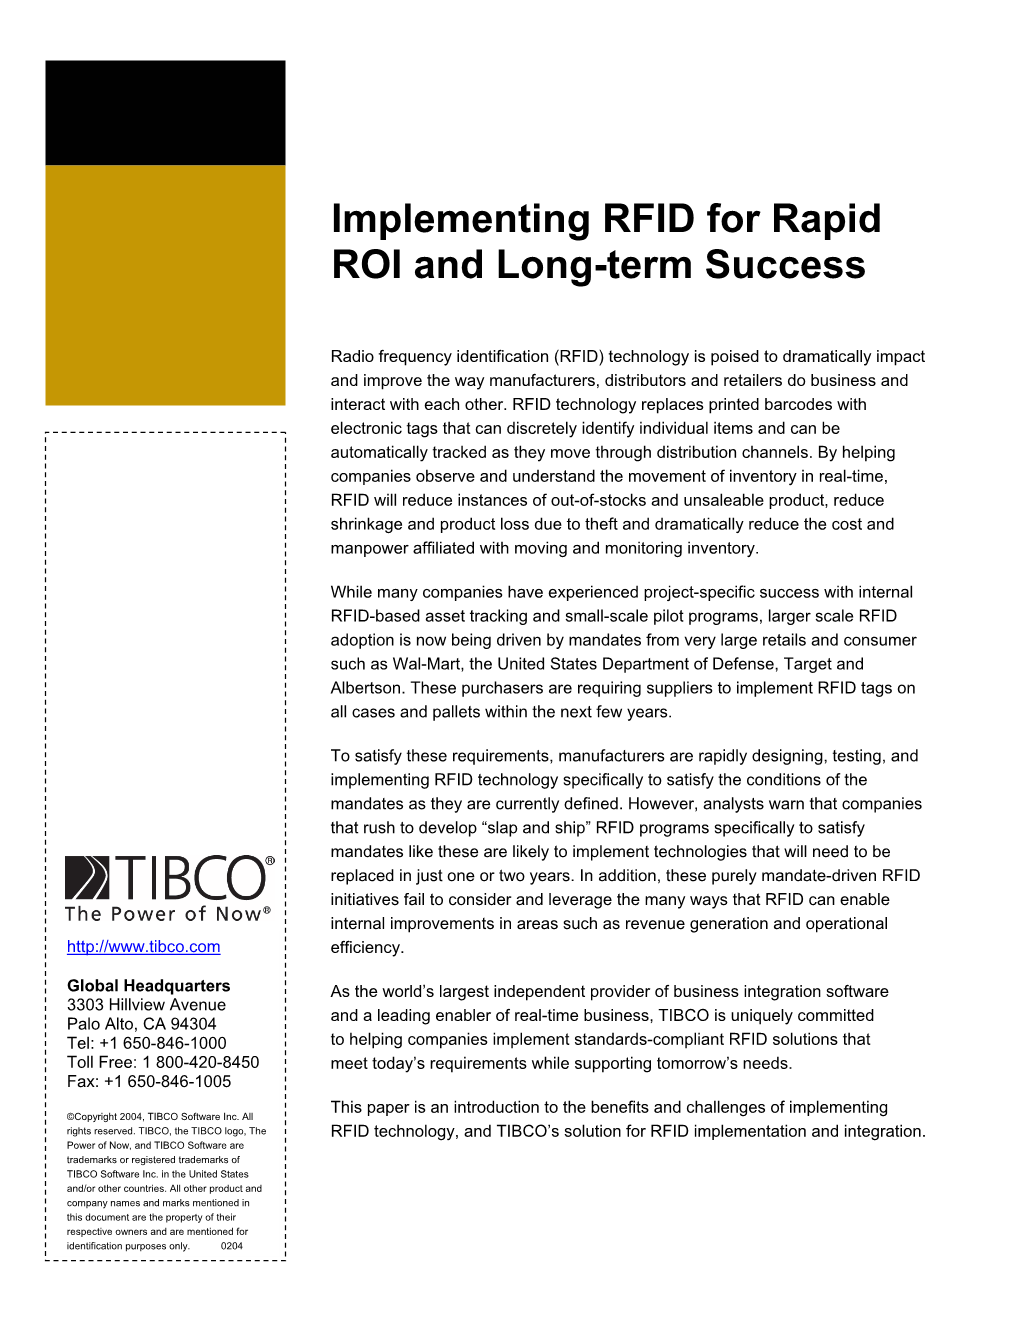 TIBCO RFID White Paper